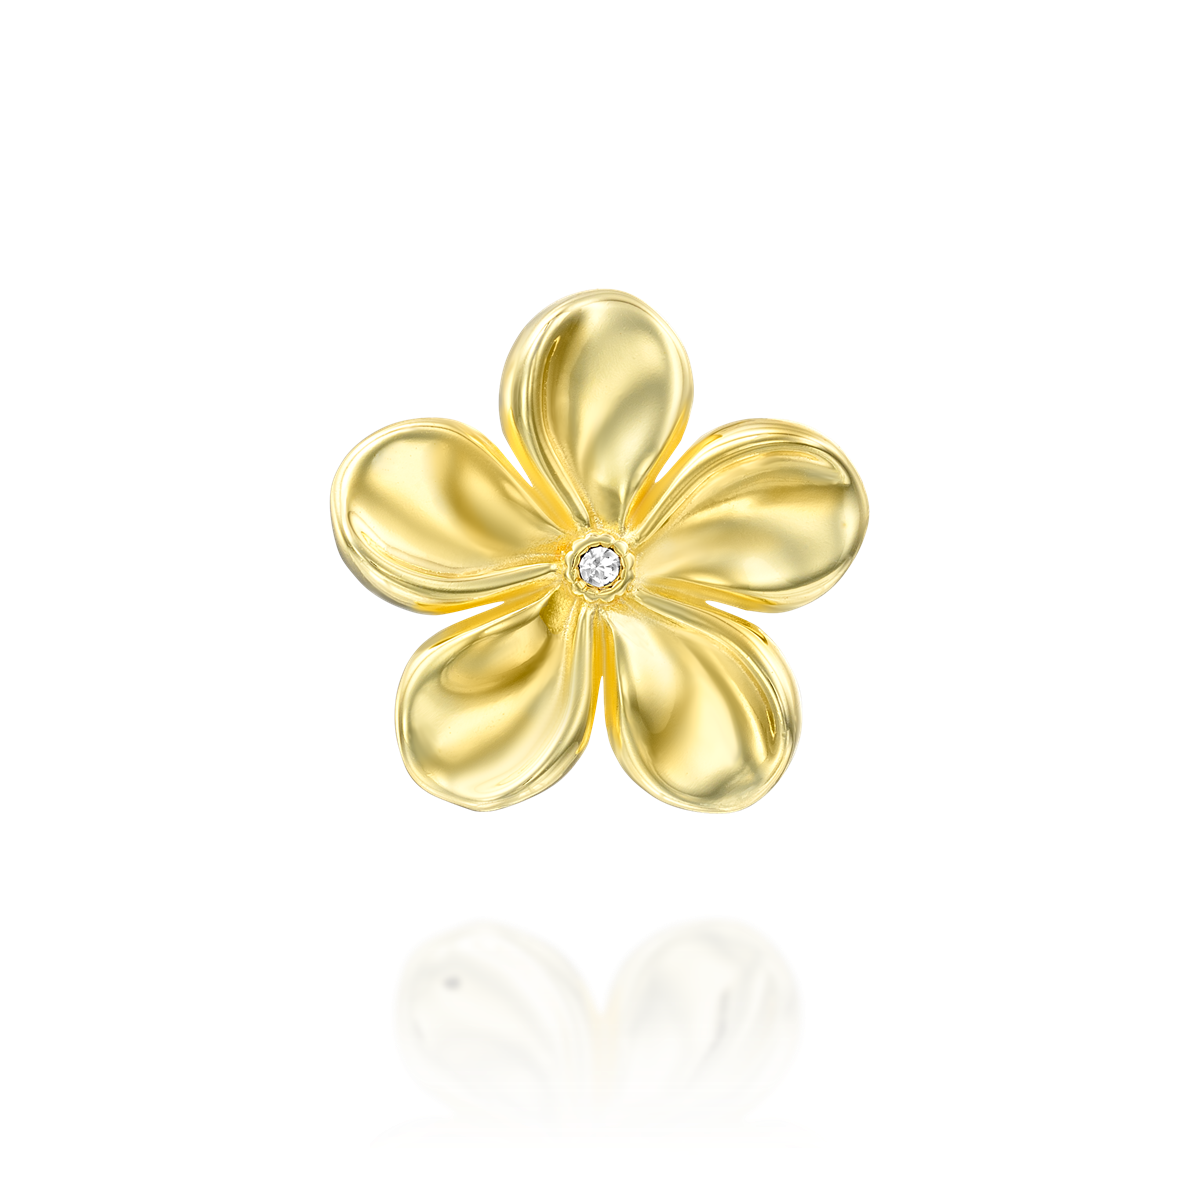 Magic golden flower